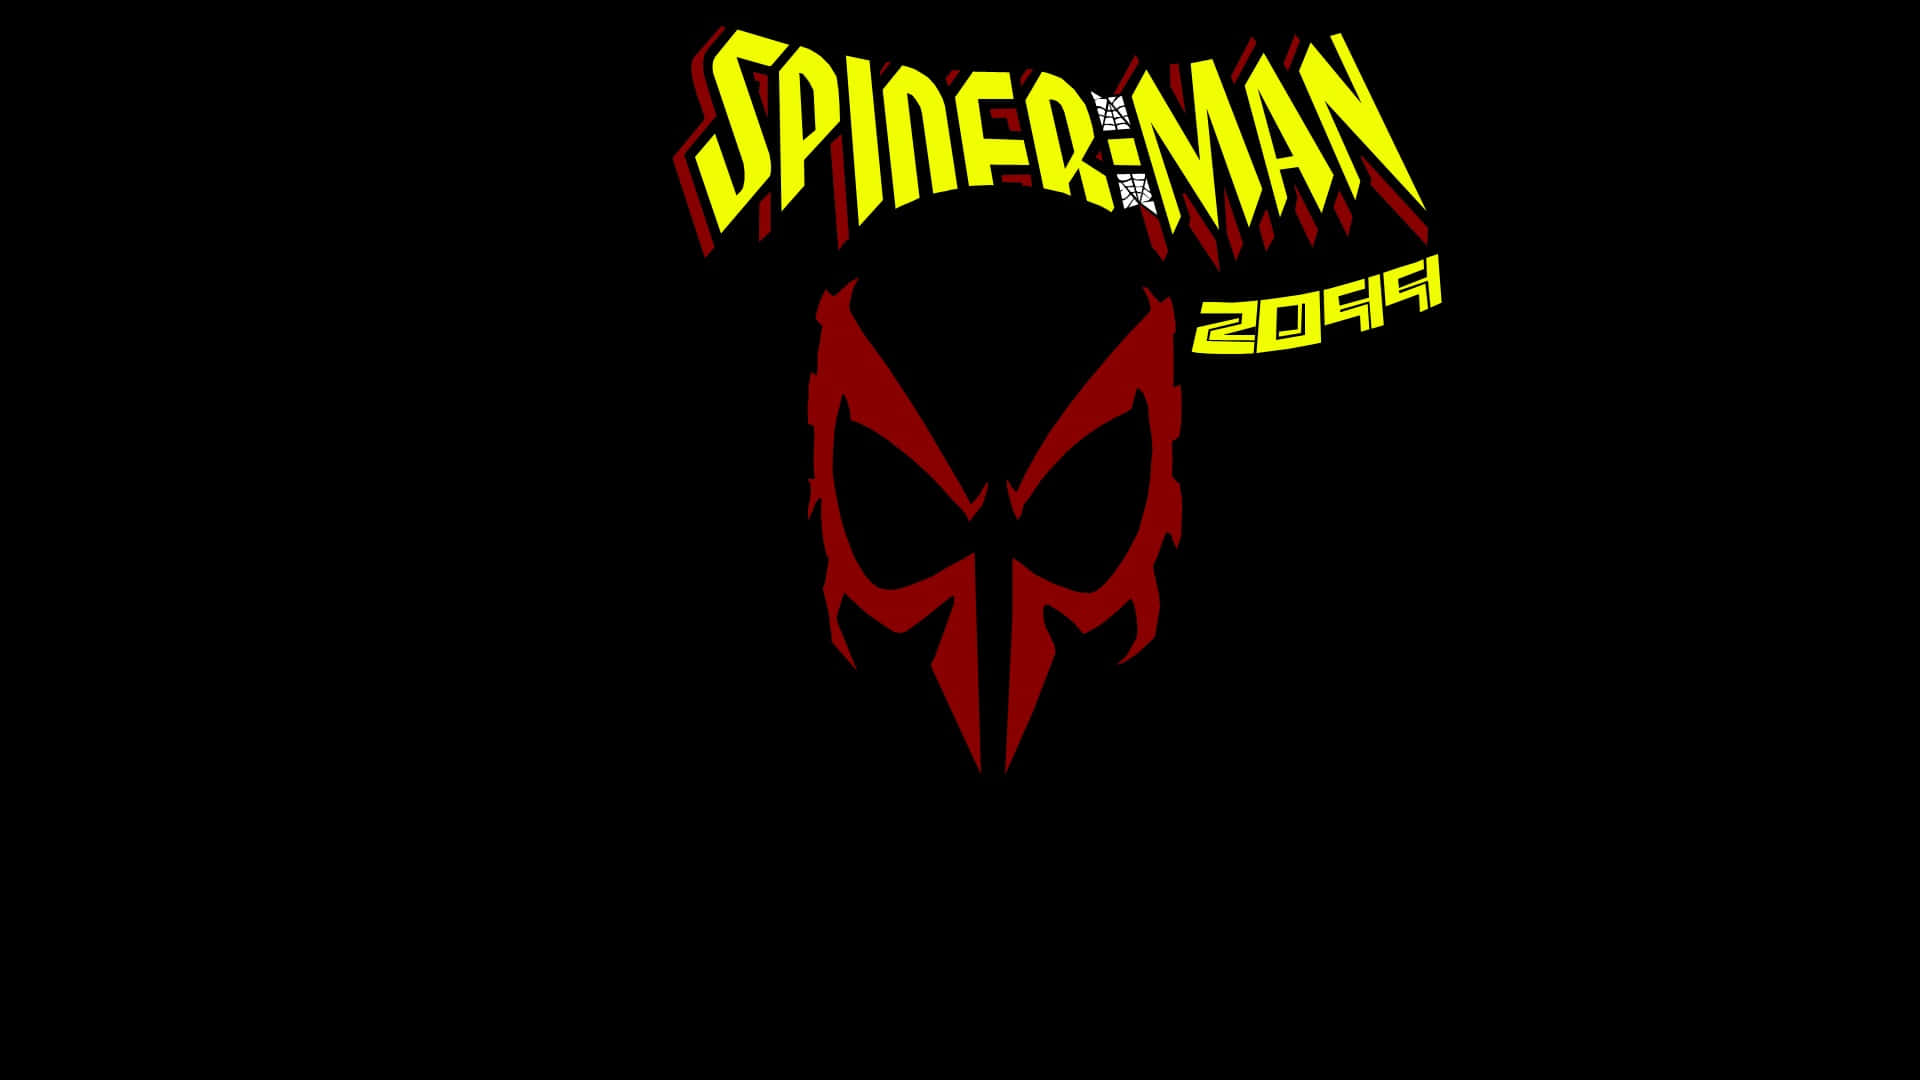 Dynamic Spider-Man 2099 in Action Wallpaper